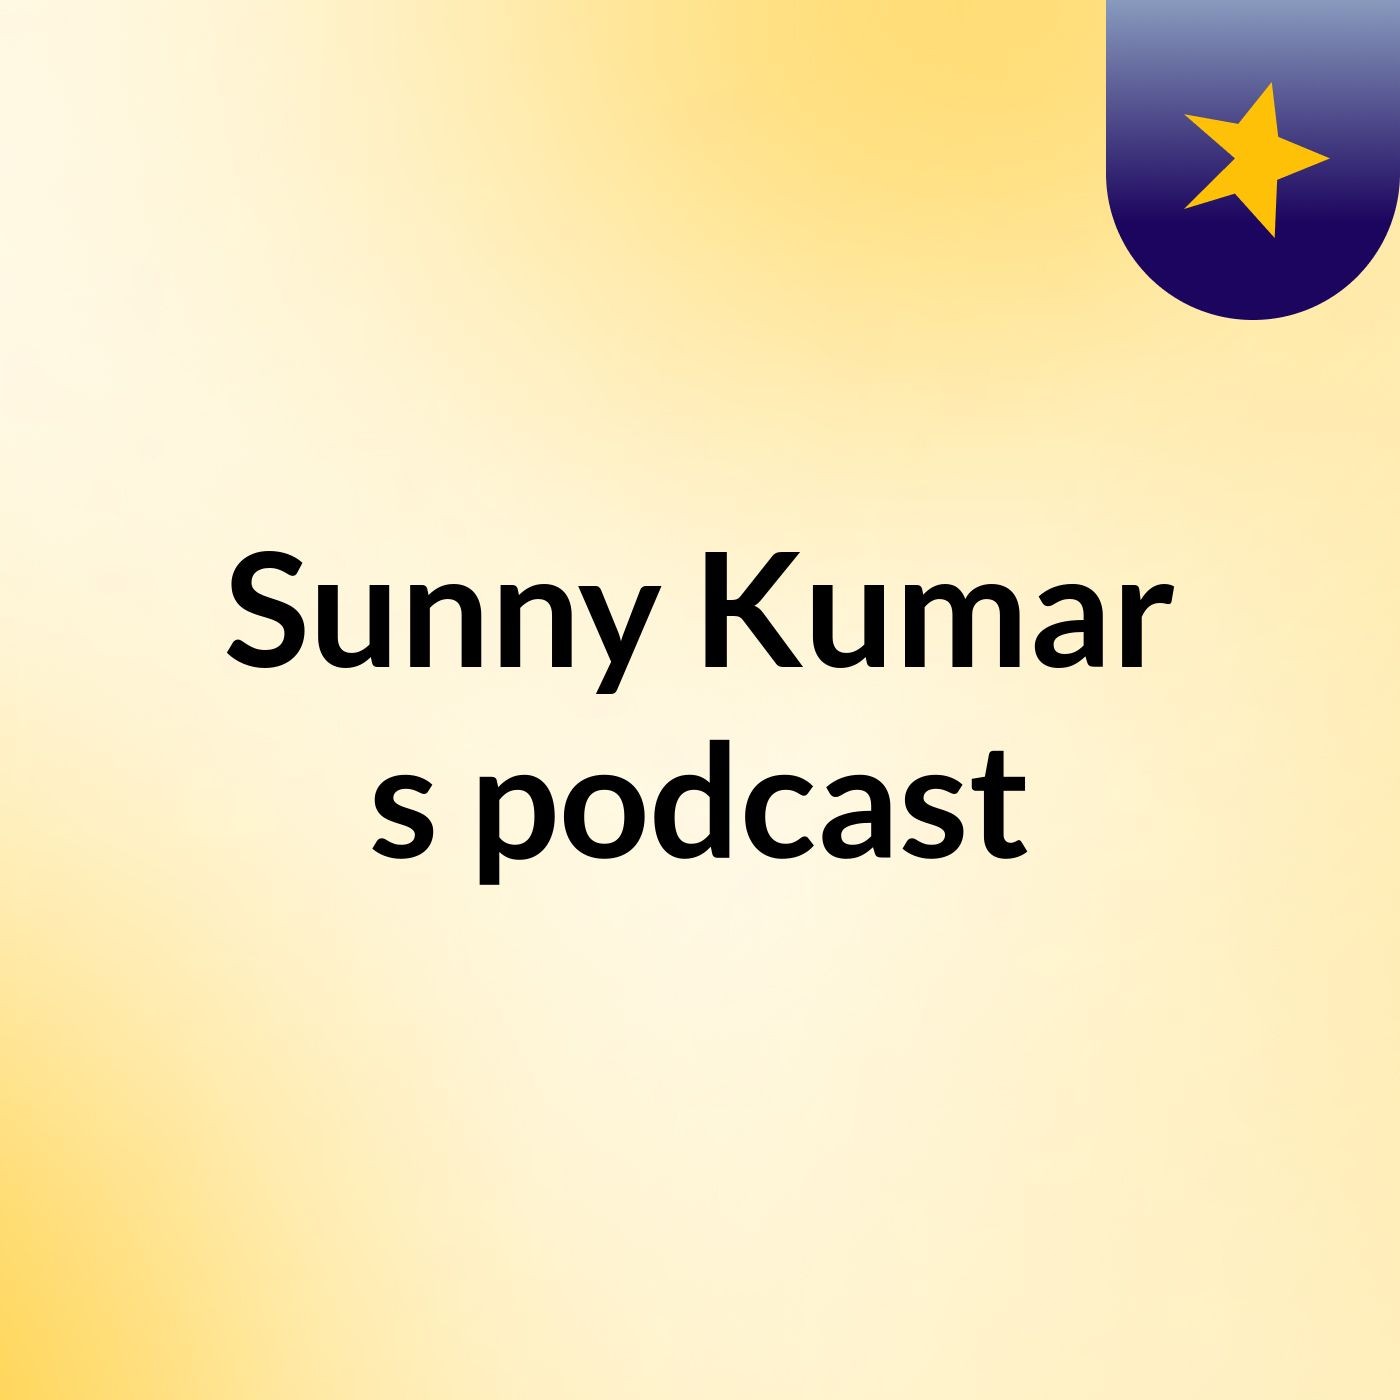 Sunny Kumar's podcast